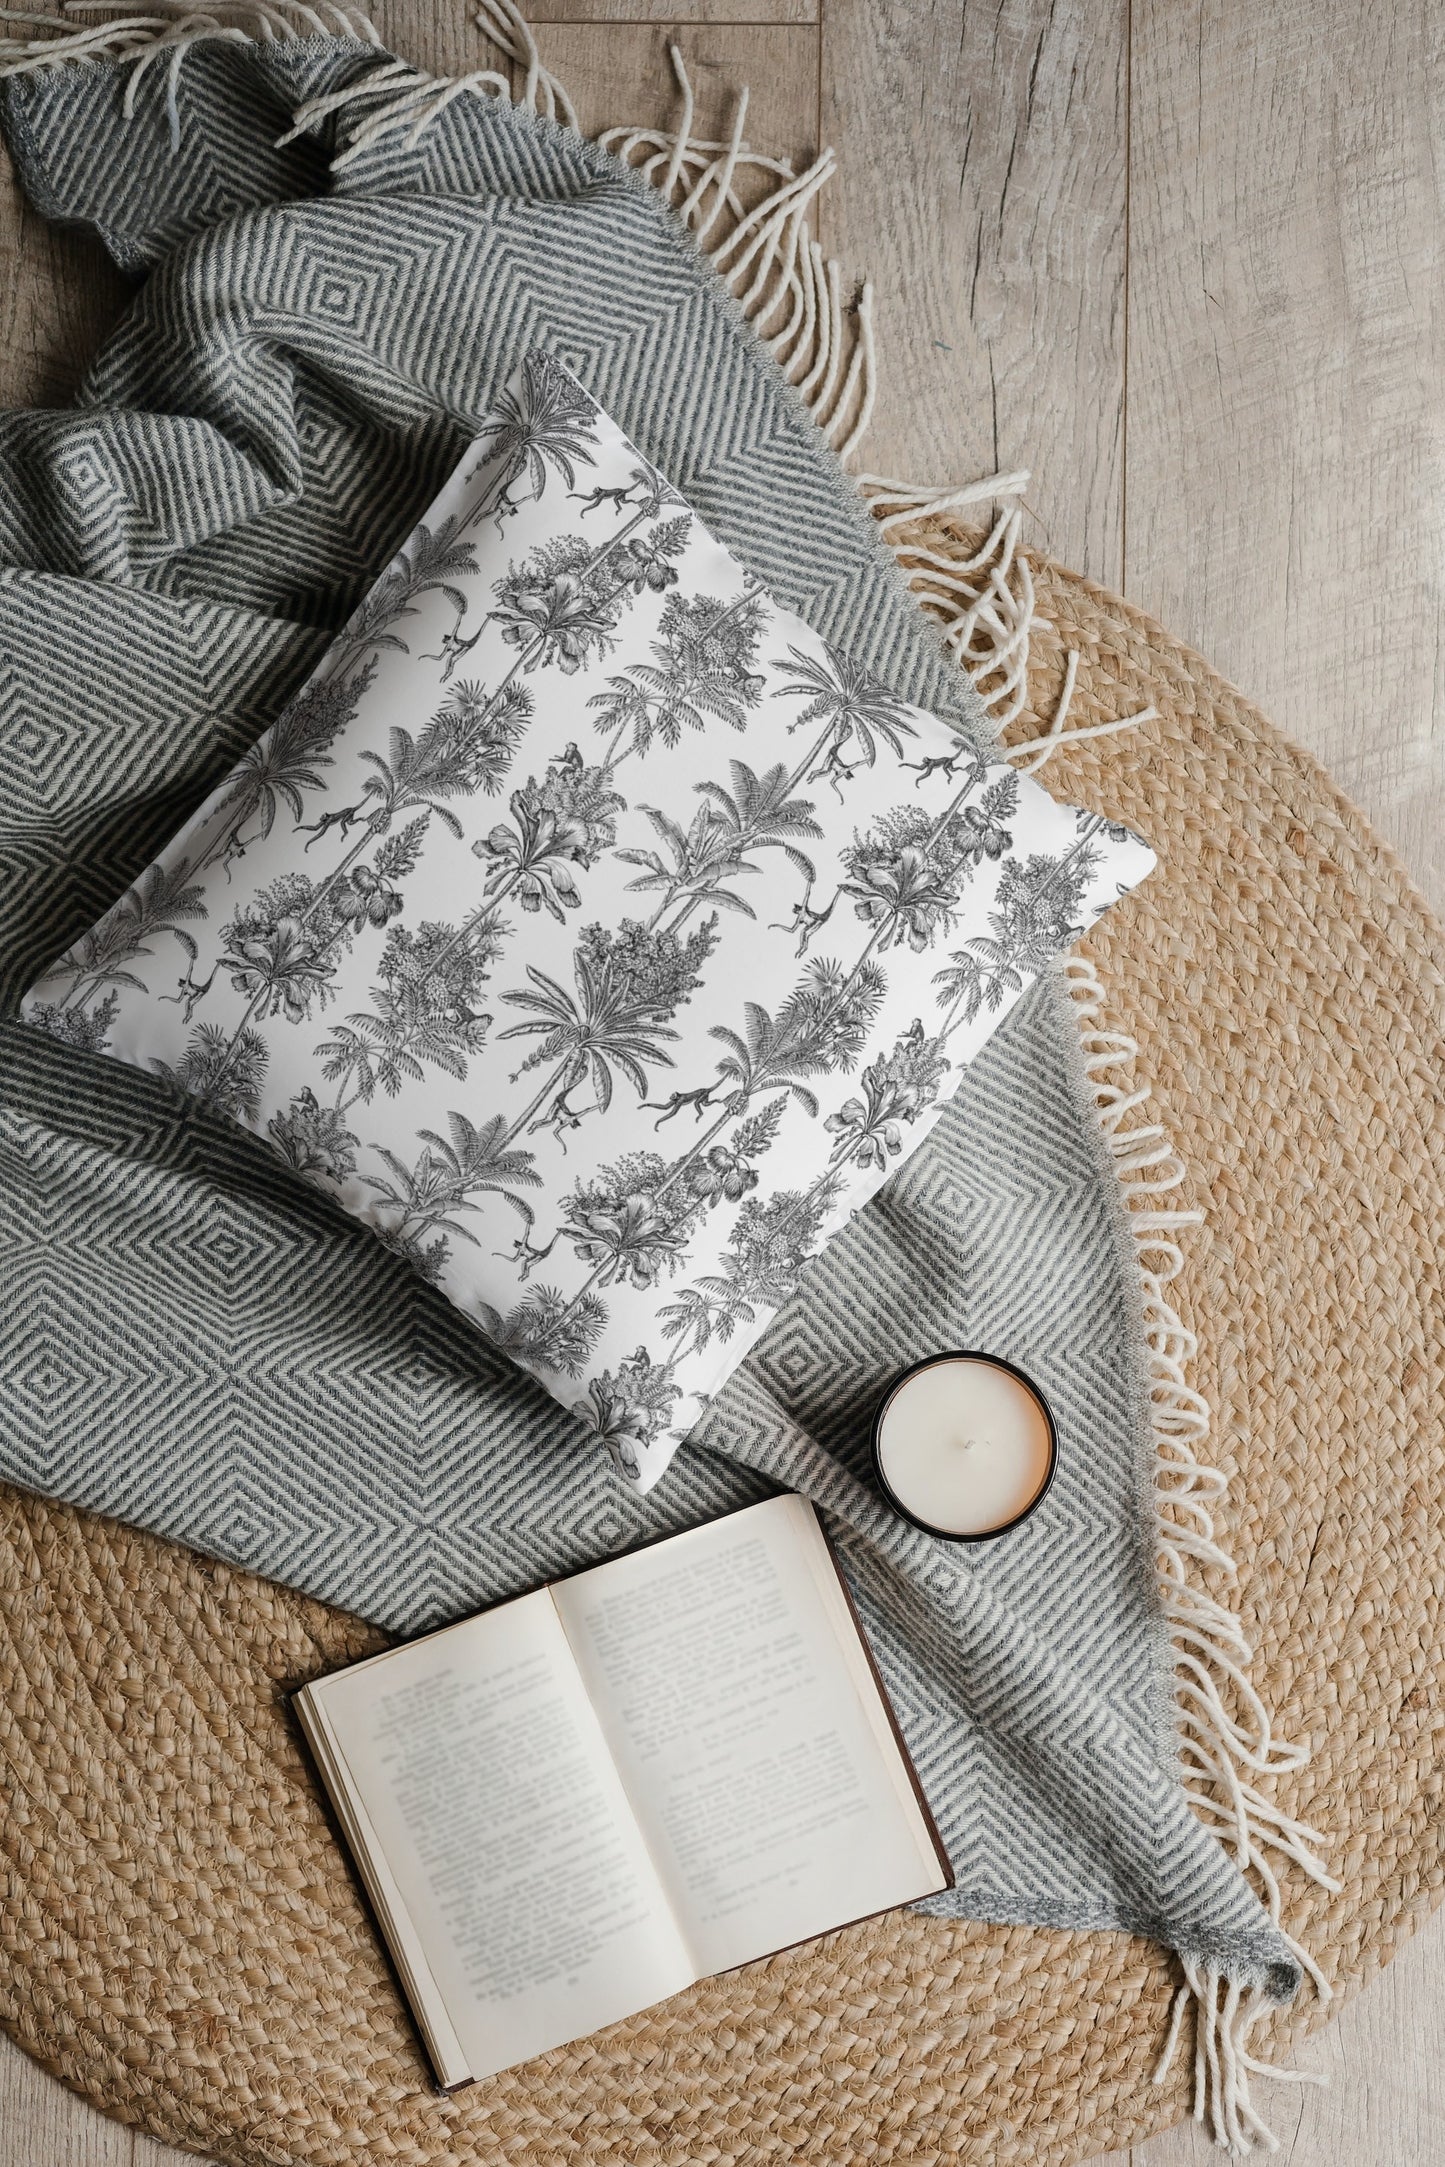 Monkey Palm Jungle Outdoor Pillows Chinoiserie Black & White